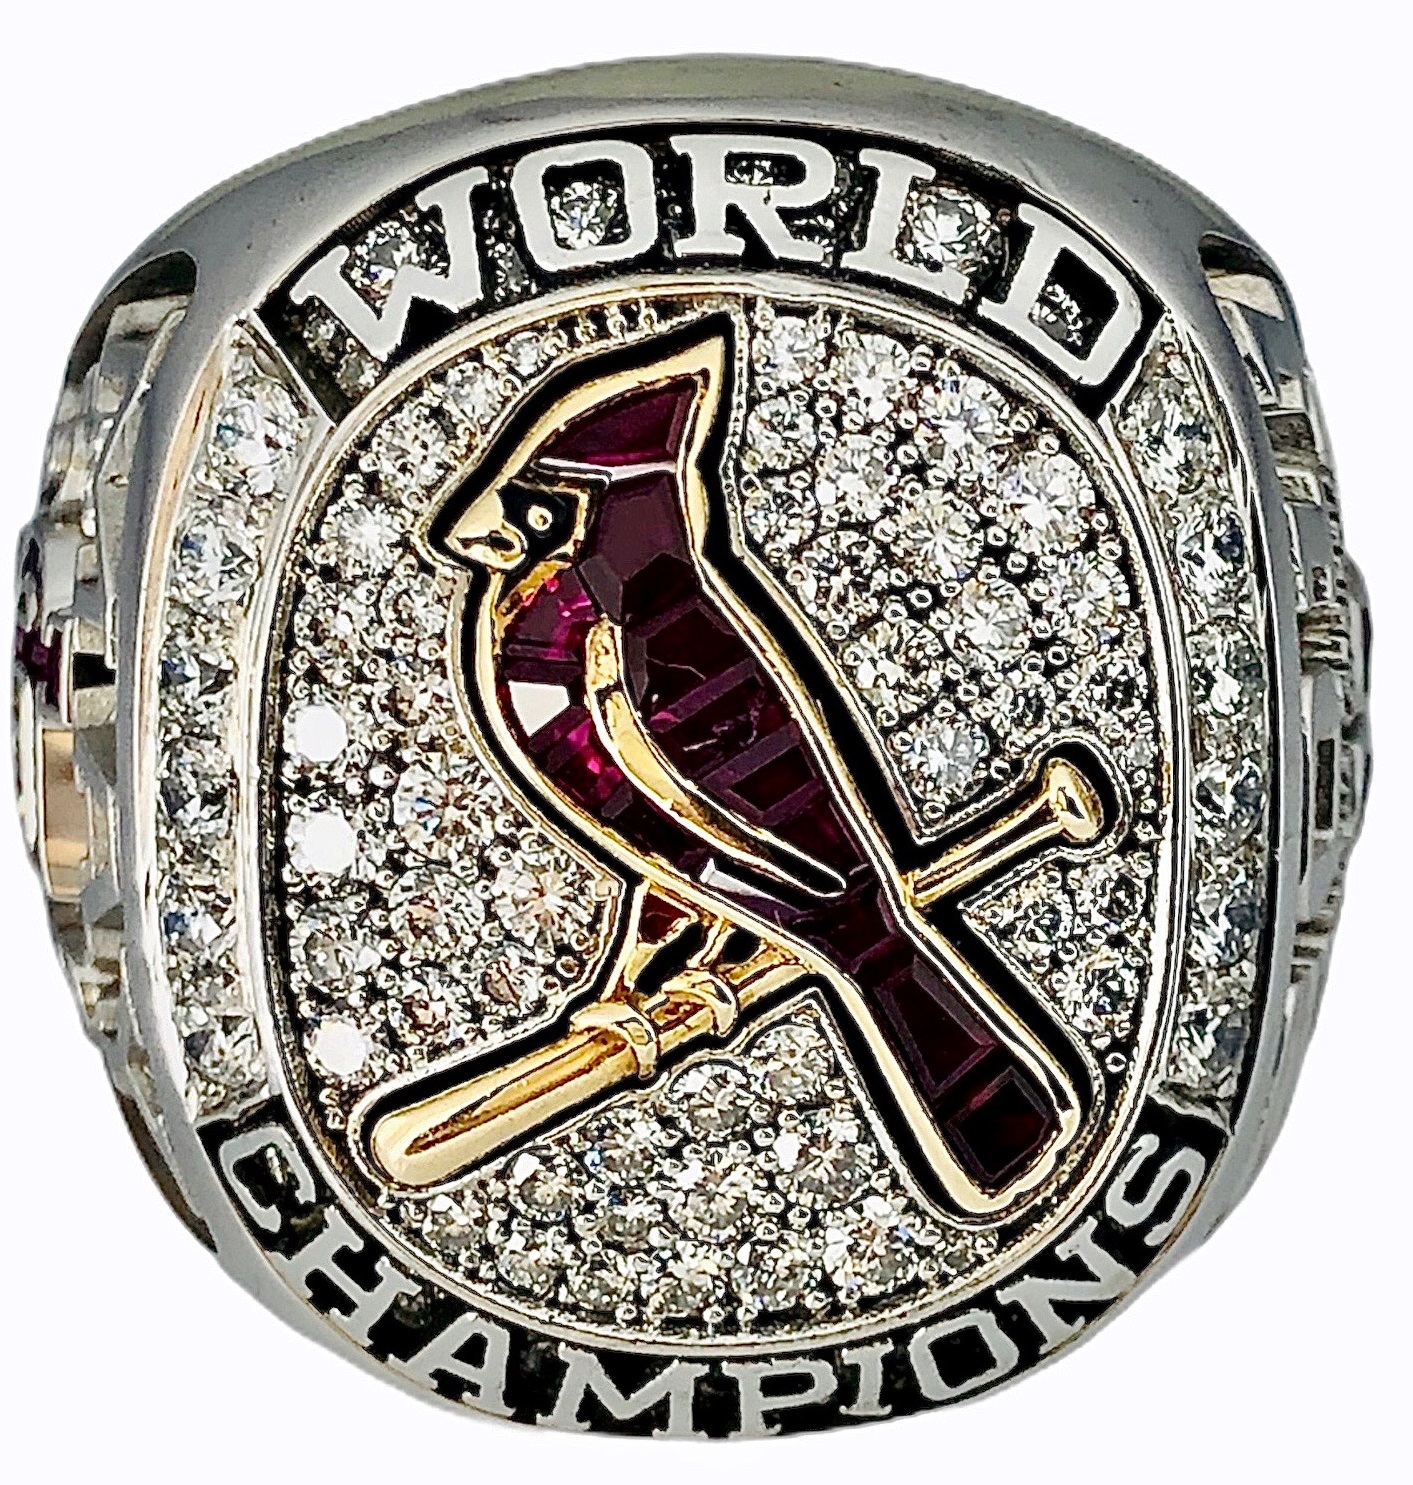 St. Louis Cardinals World Series Ring (2011)